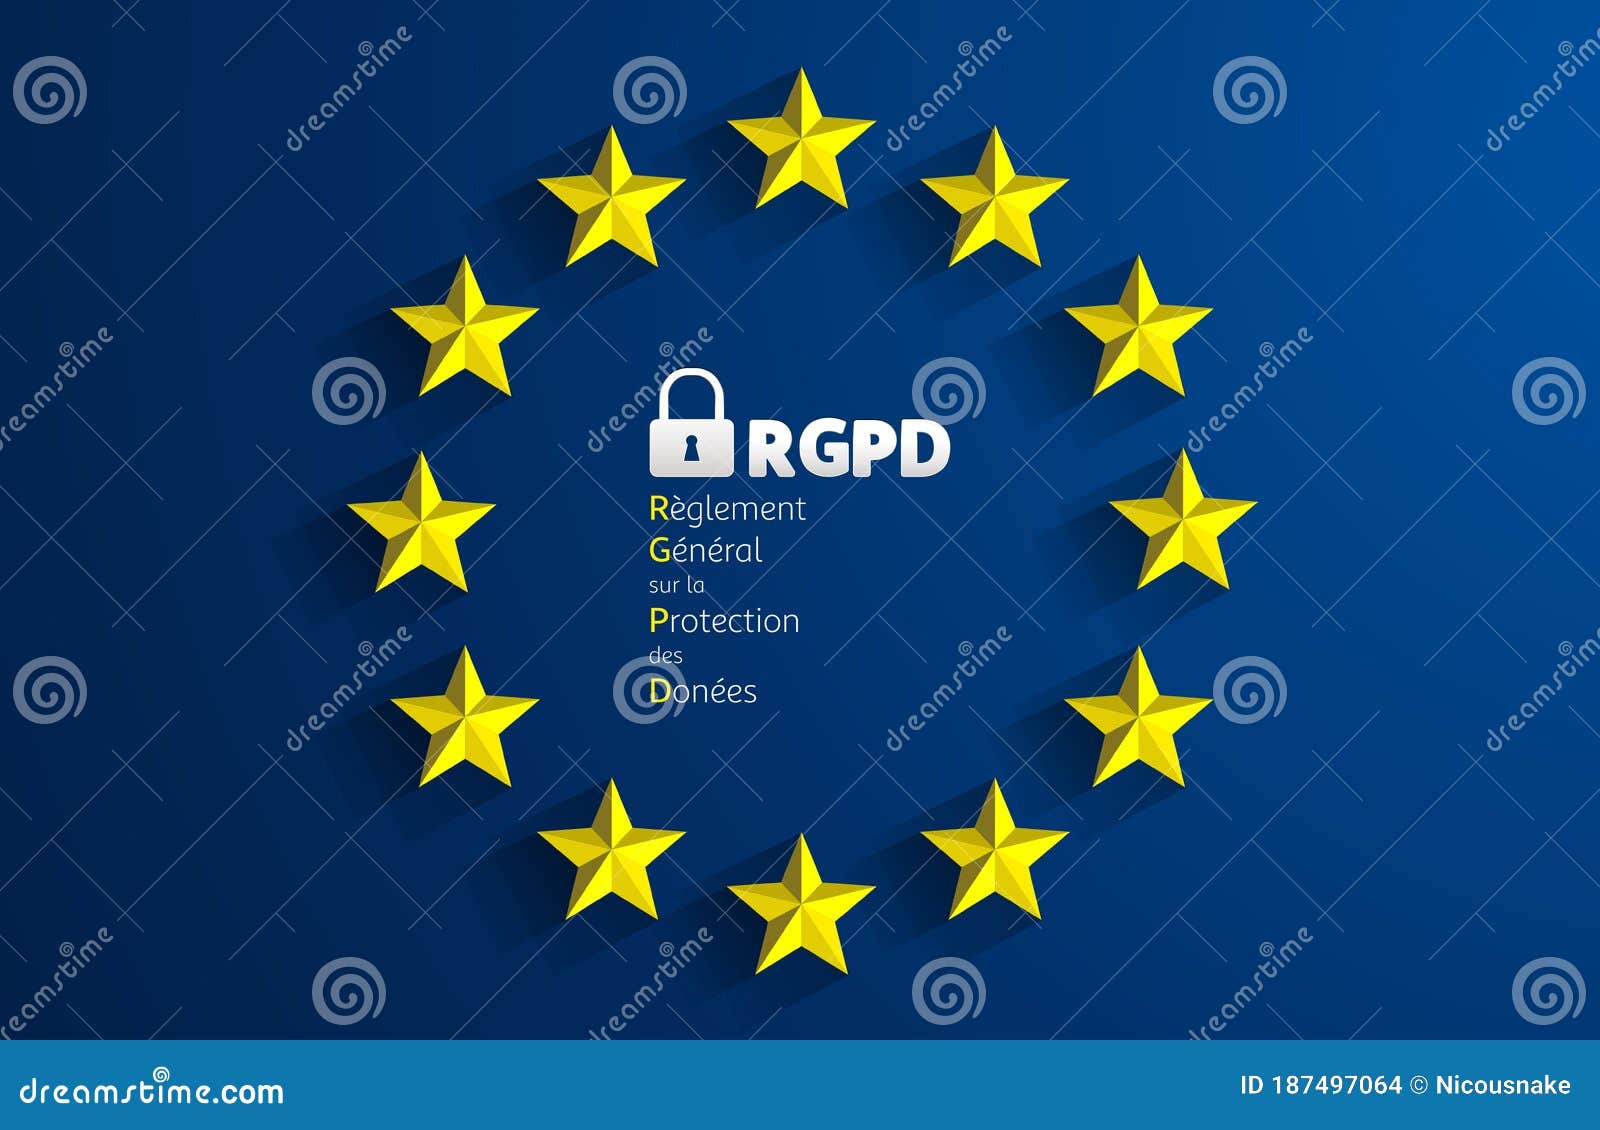 rgpd - french: reglement general sur la protection des donnees means: gdpr - general data protection regulation